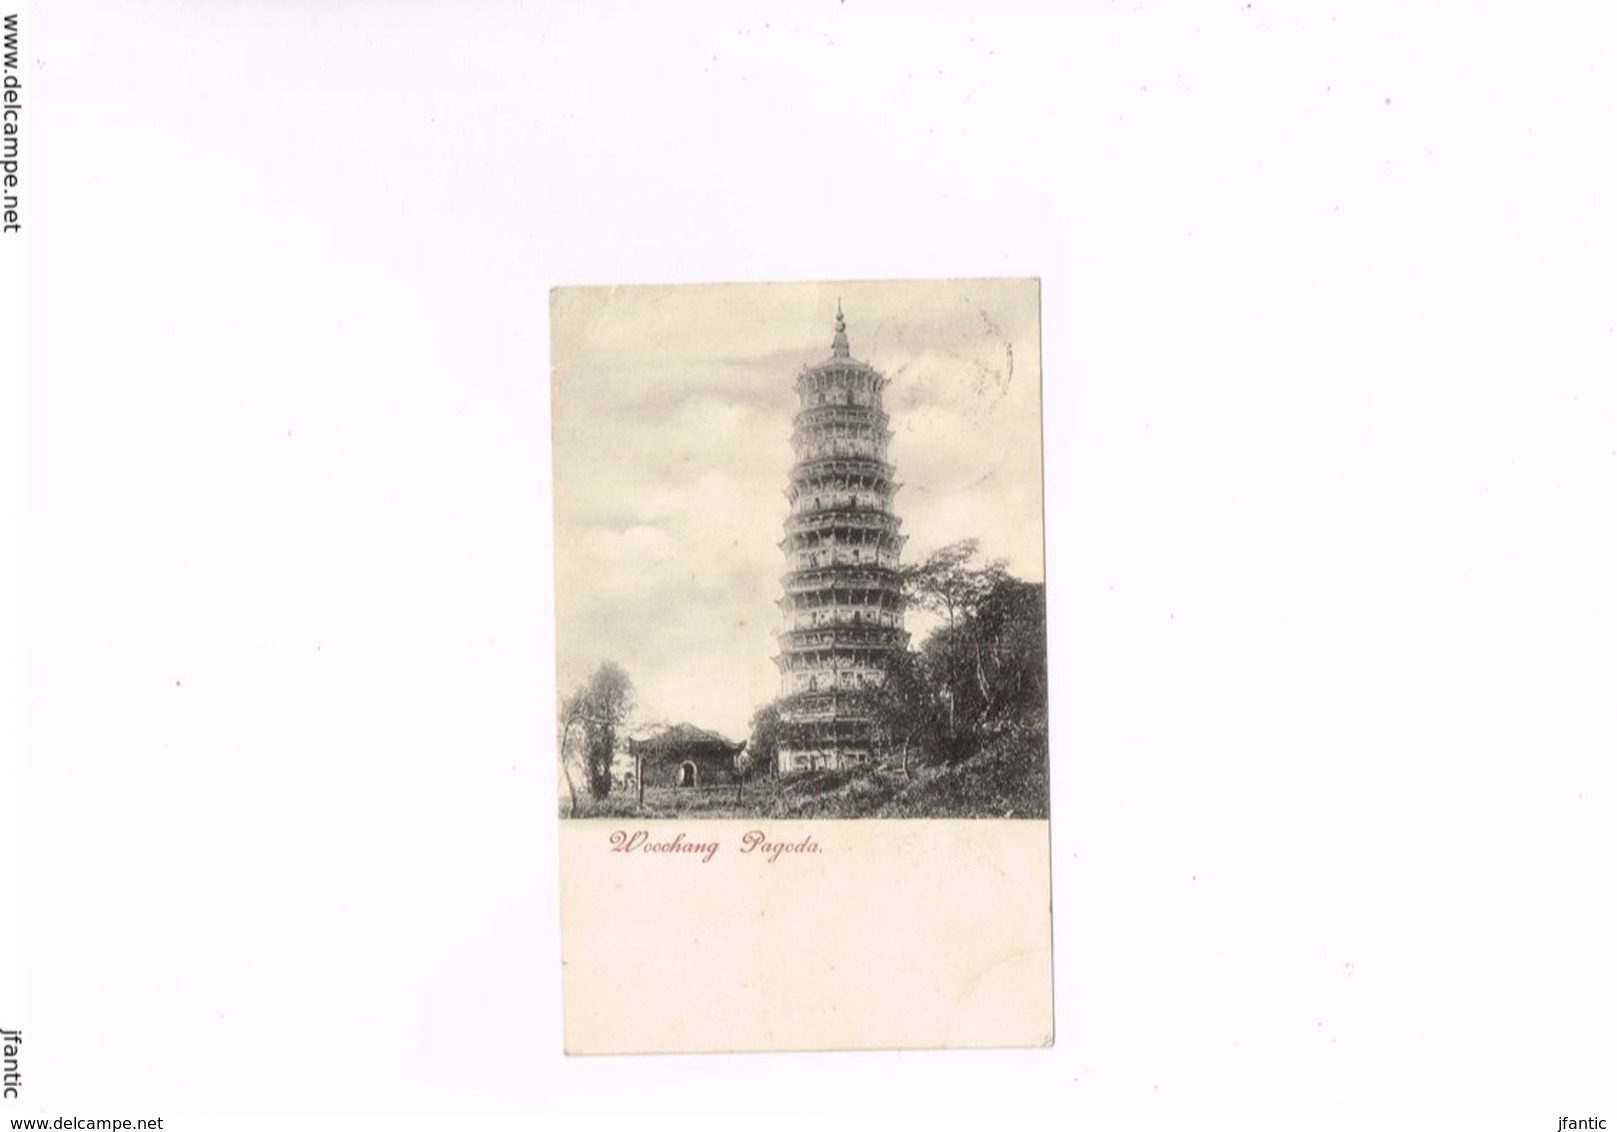 Woochang Pagoda, Old China Postcard, Carte Postale Ancienne Chine 1900. - Chine